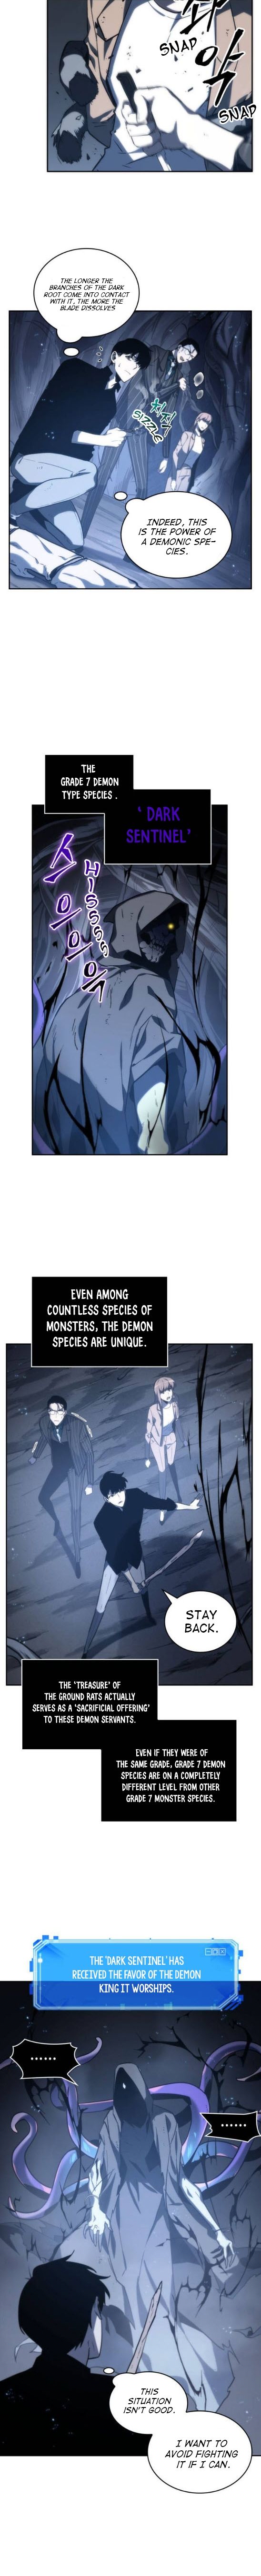 Omniscient Reader's View Manga Manga Chapter - 20 - image 19